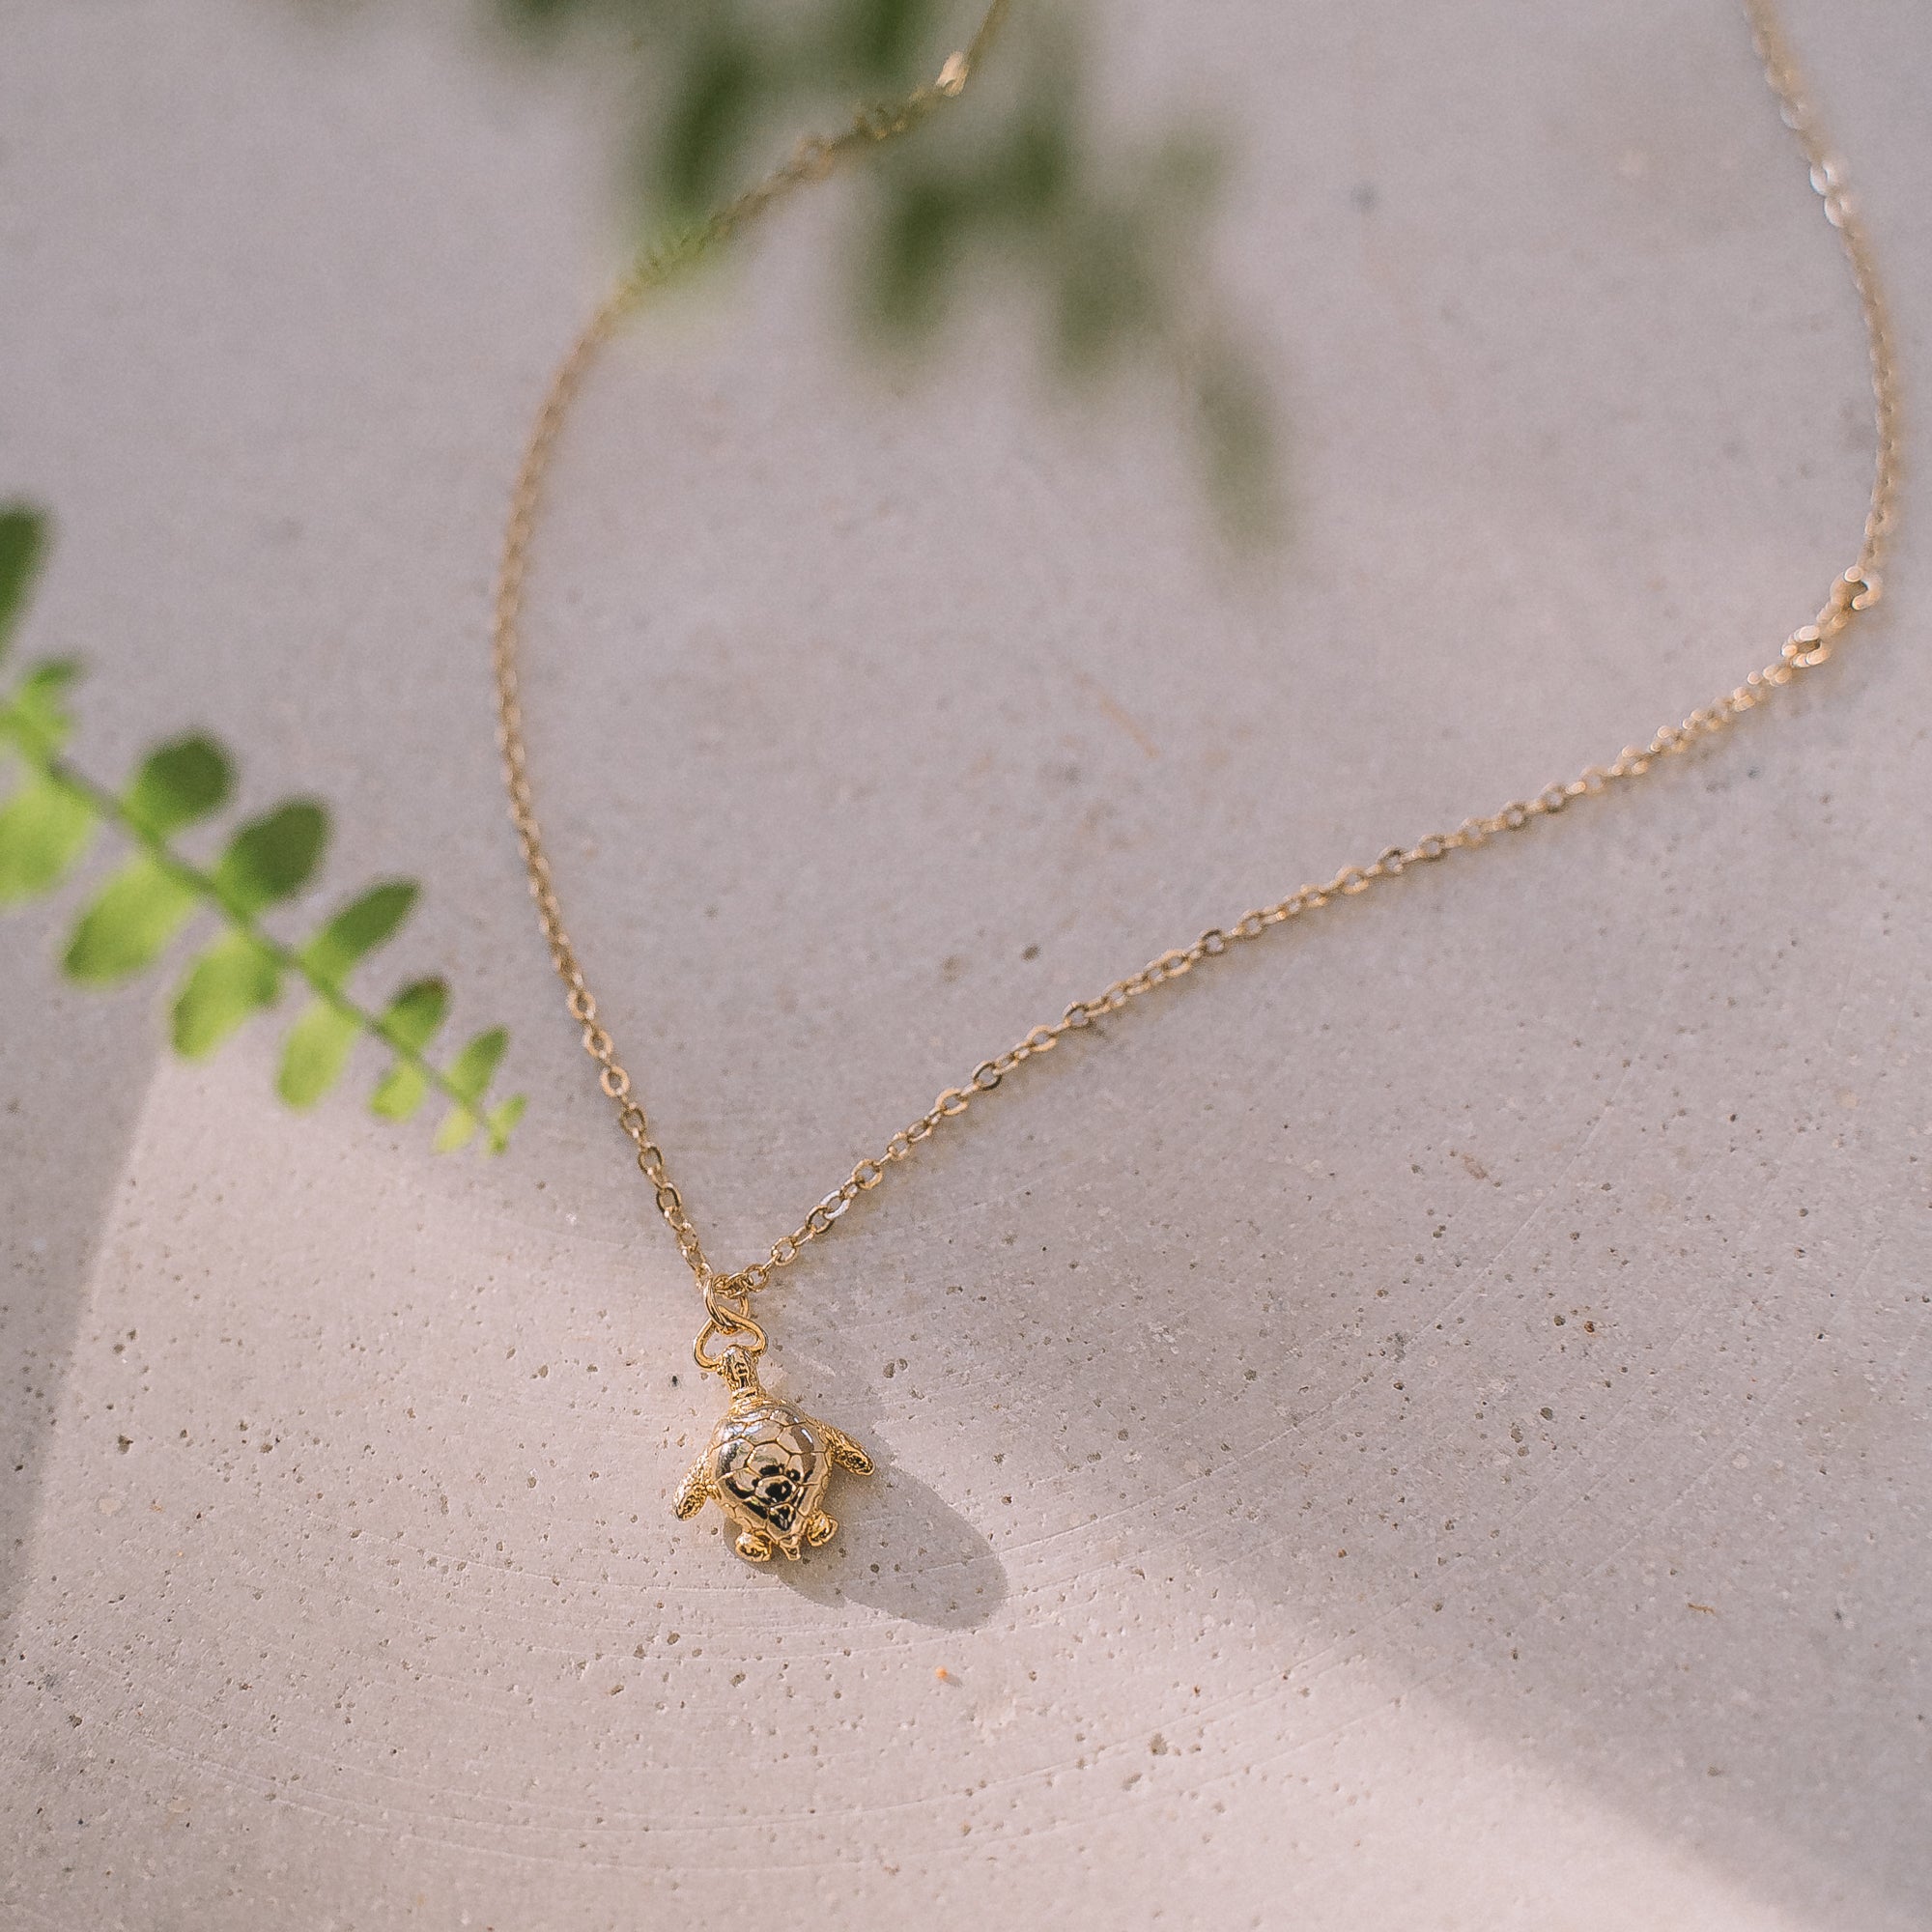 gold turtle charm necklace 14k gold filled bijoux sandrine devost jewelry